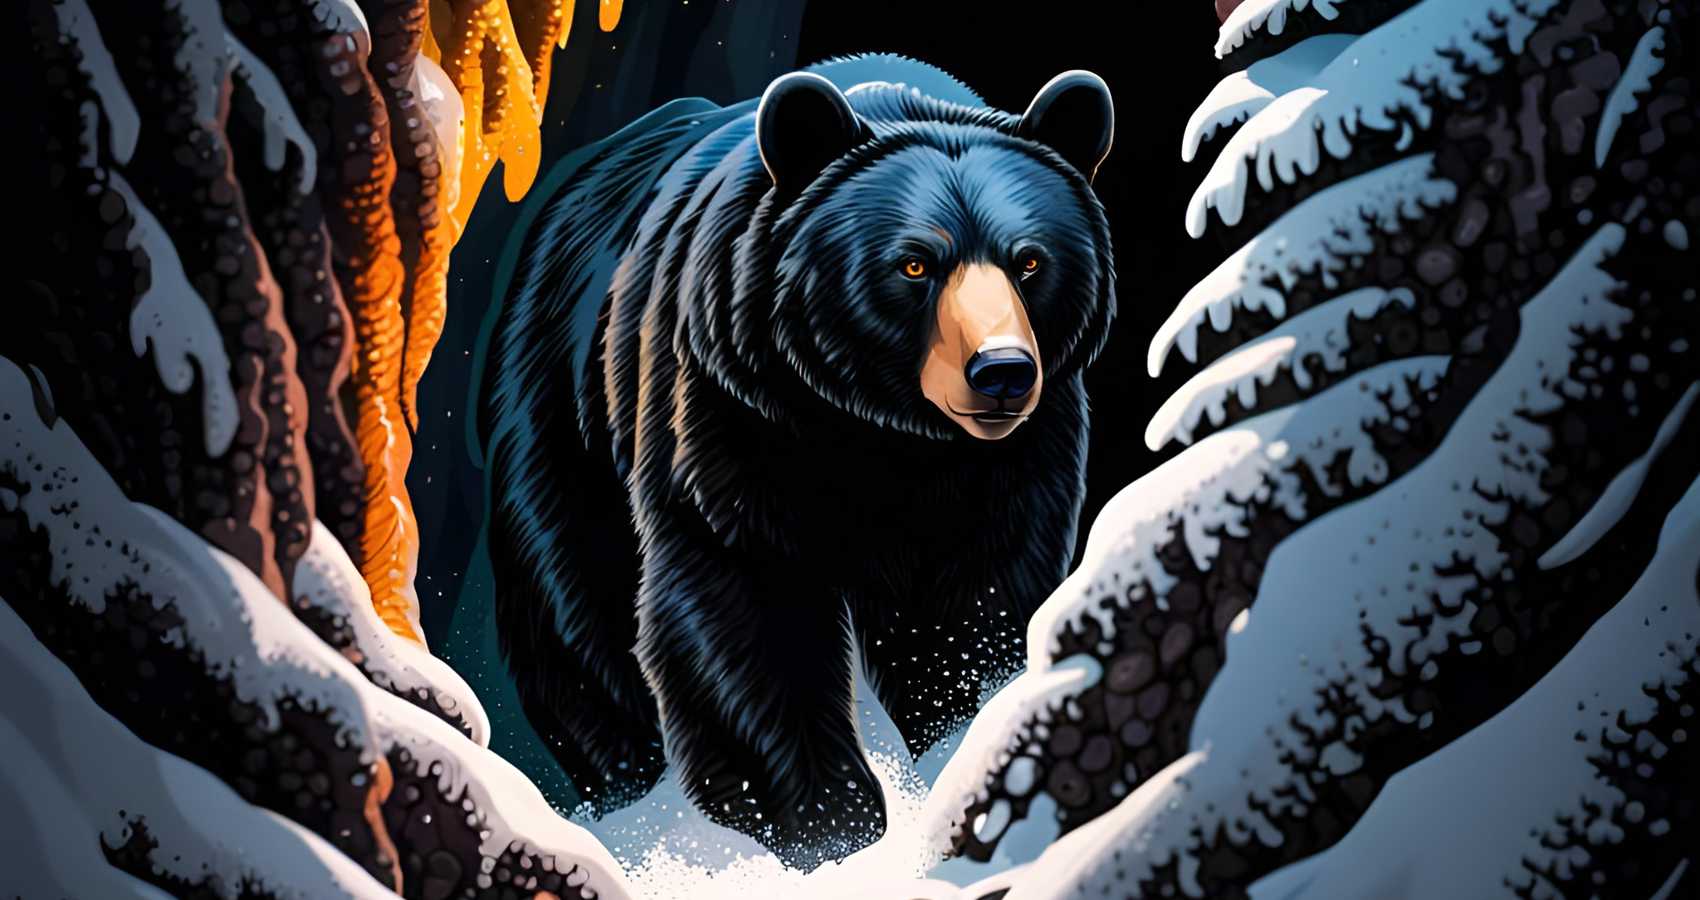 The Bearskin, a short story by Scott Fischer at Spillwords.com